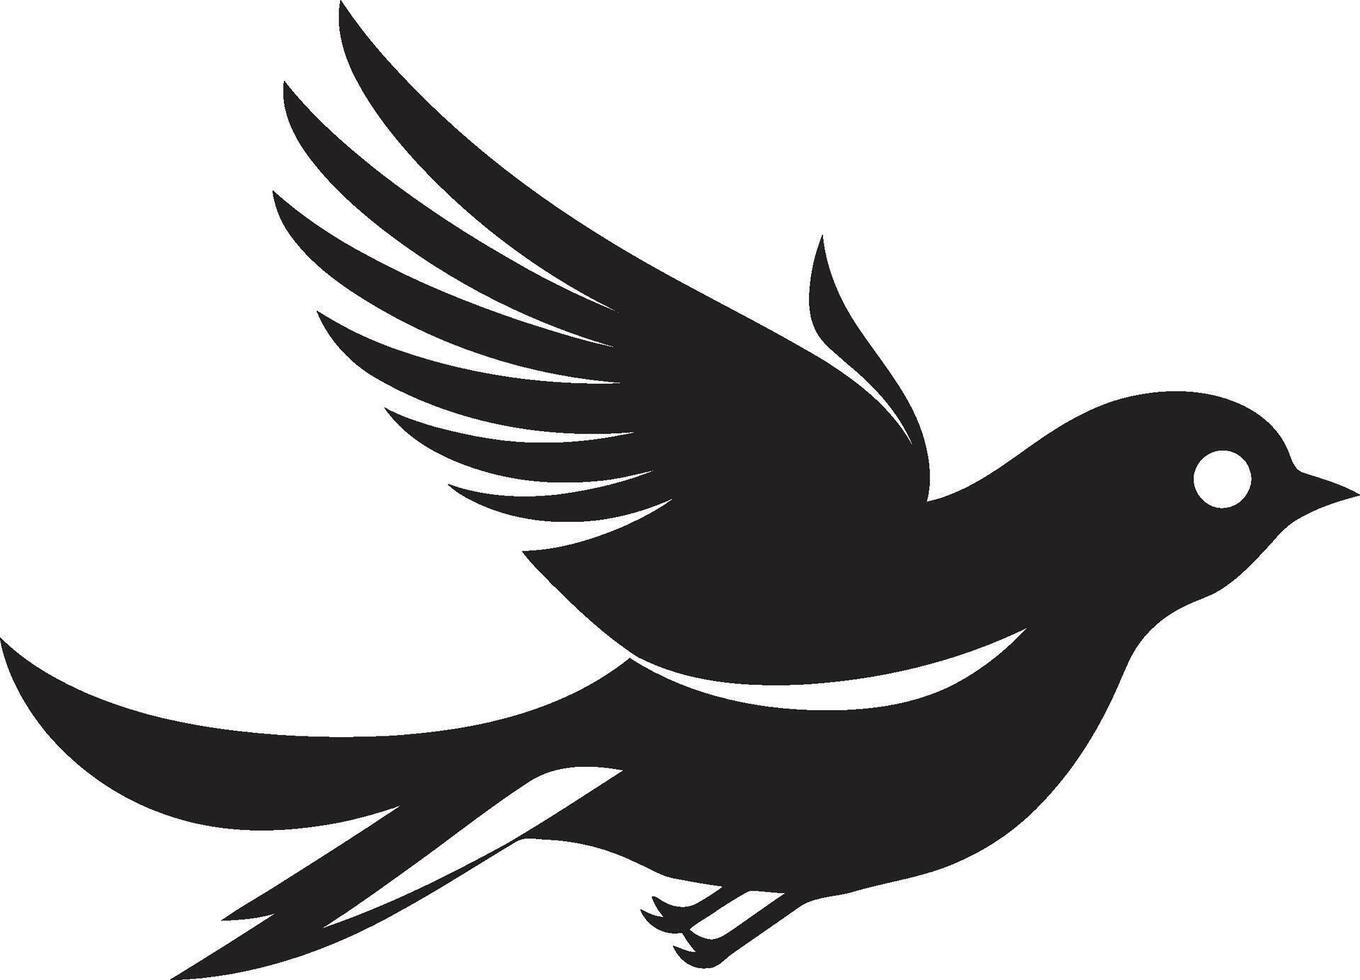 plumado elegancia linda negro revoloteando libertad negro pájaro vector